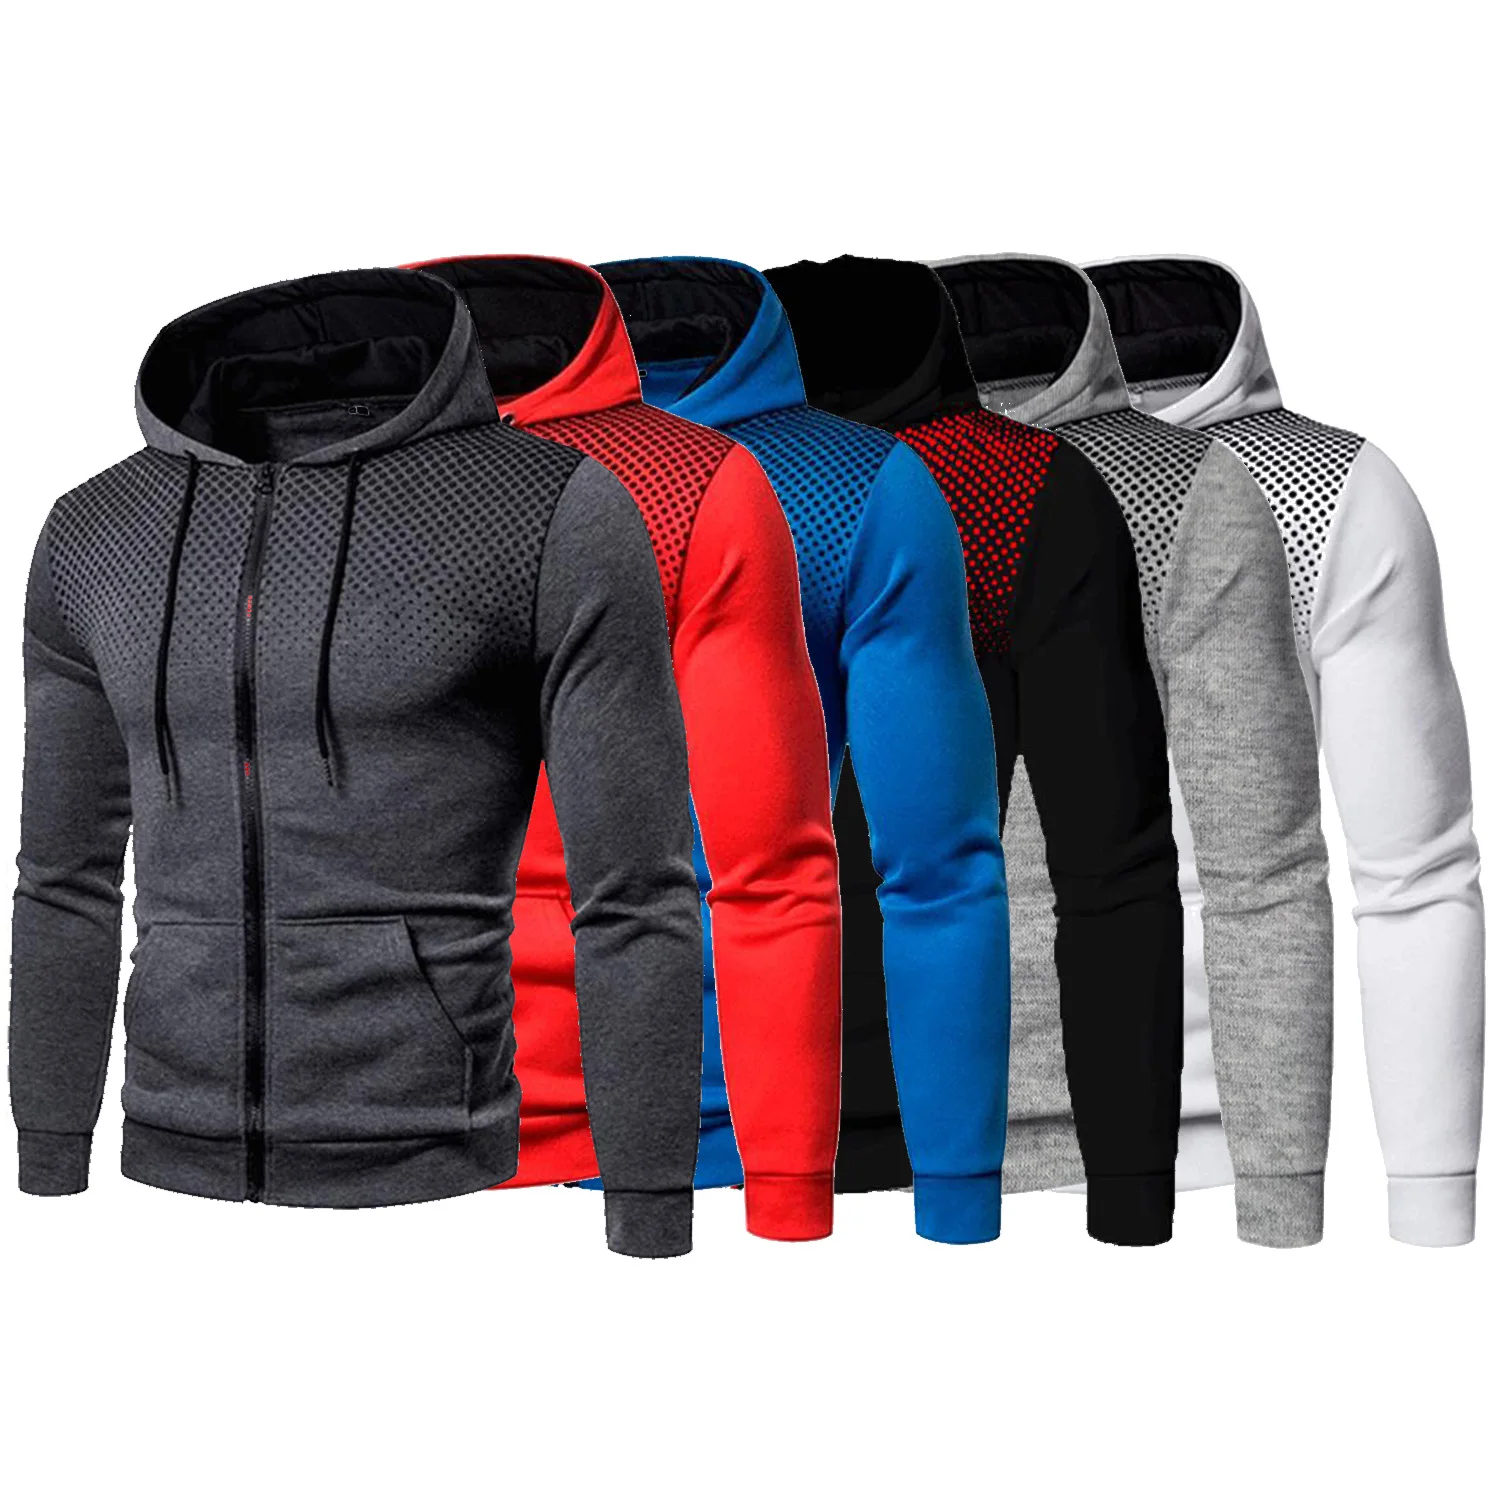 

Men Casual Sets 2021 Winter New Brand Splice Jogger Tracksuit Zipper Hoodies+Pants 2PC Sets Men's Sportswear Sport Suit Clothing